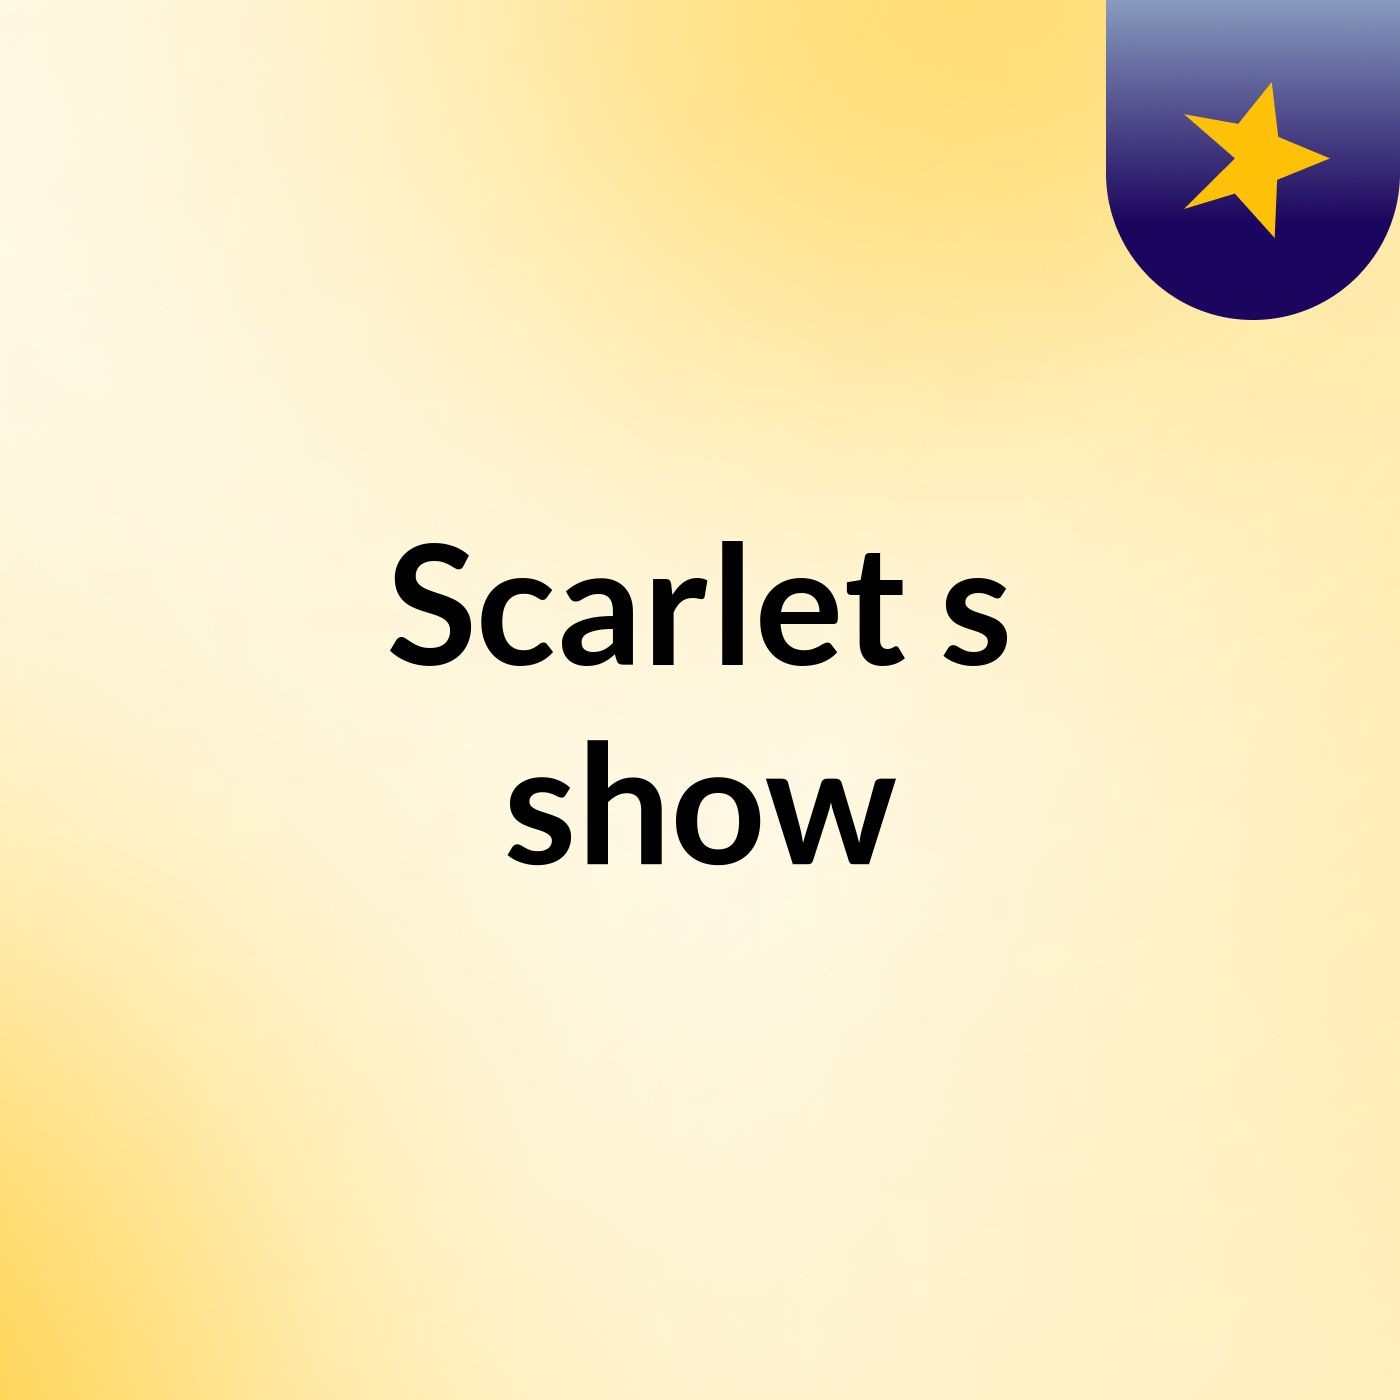 Scarlet's show